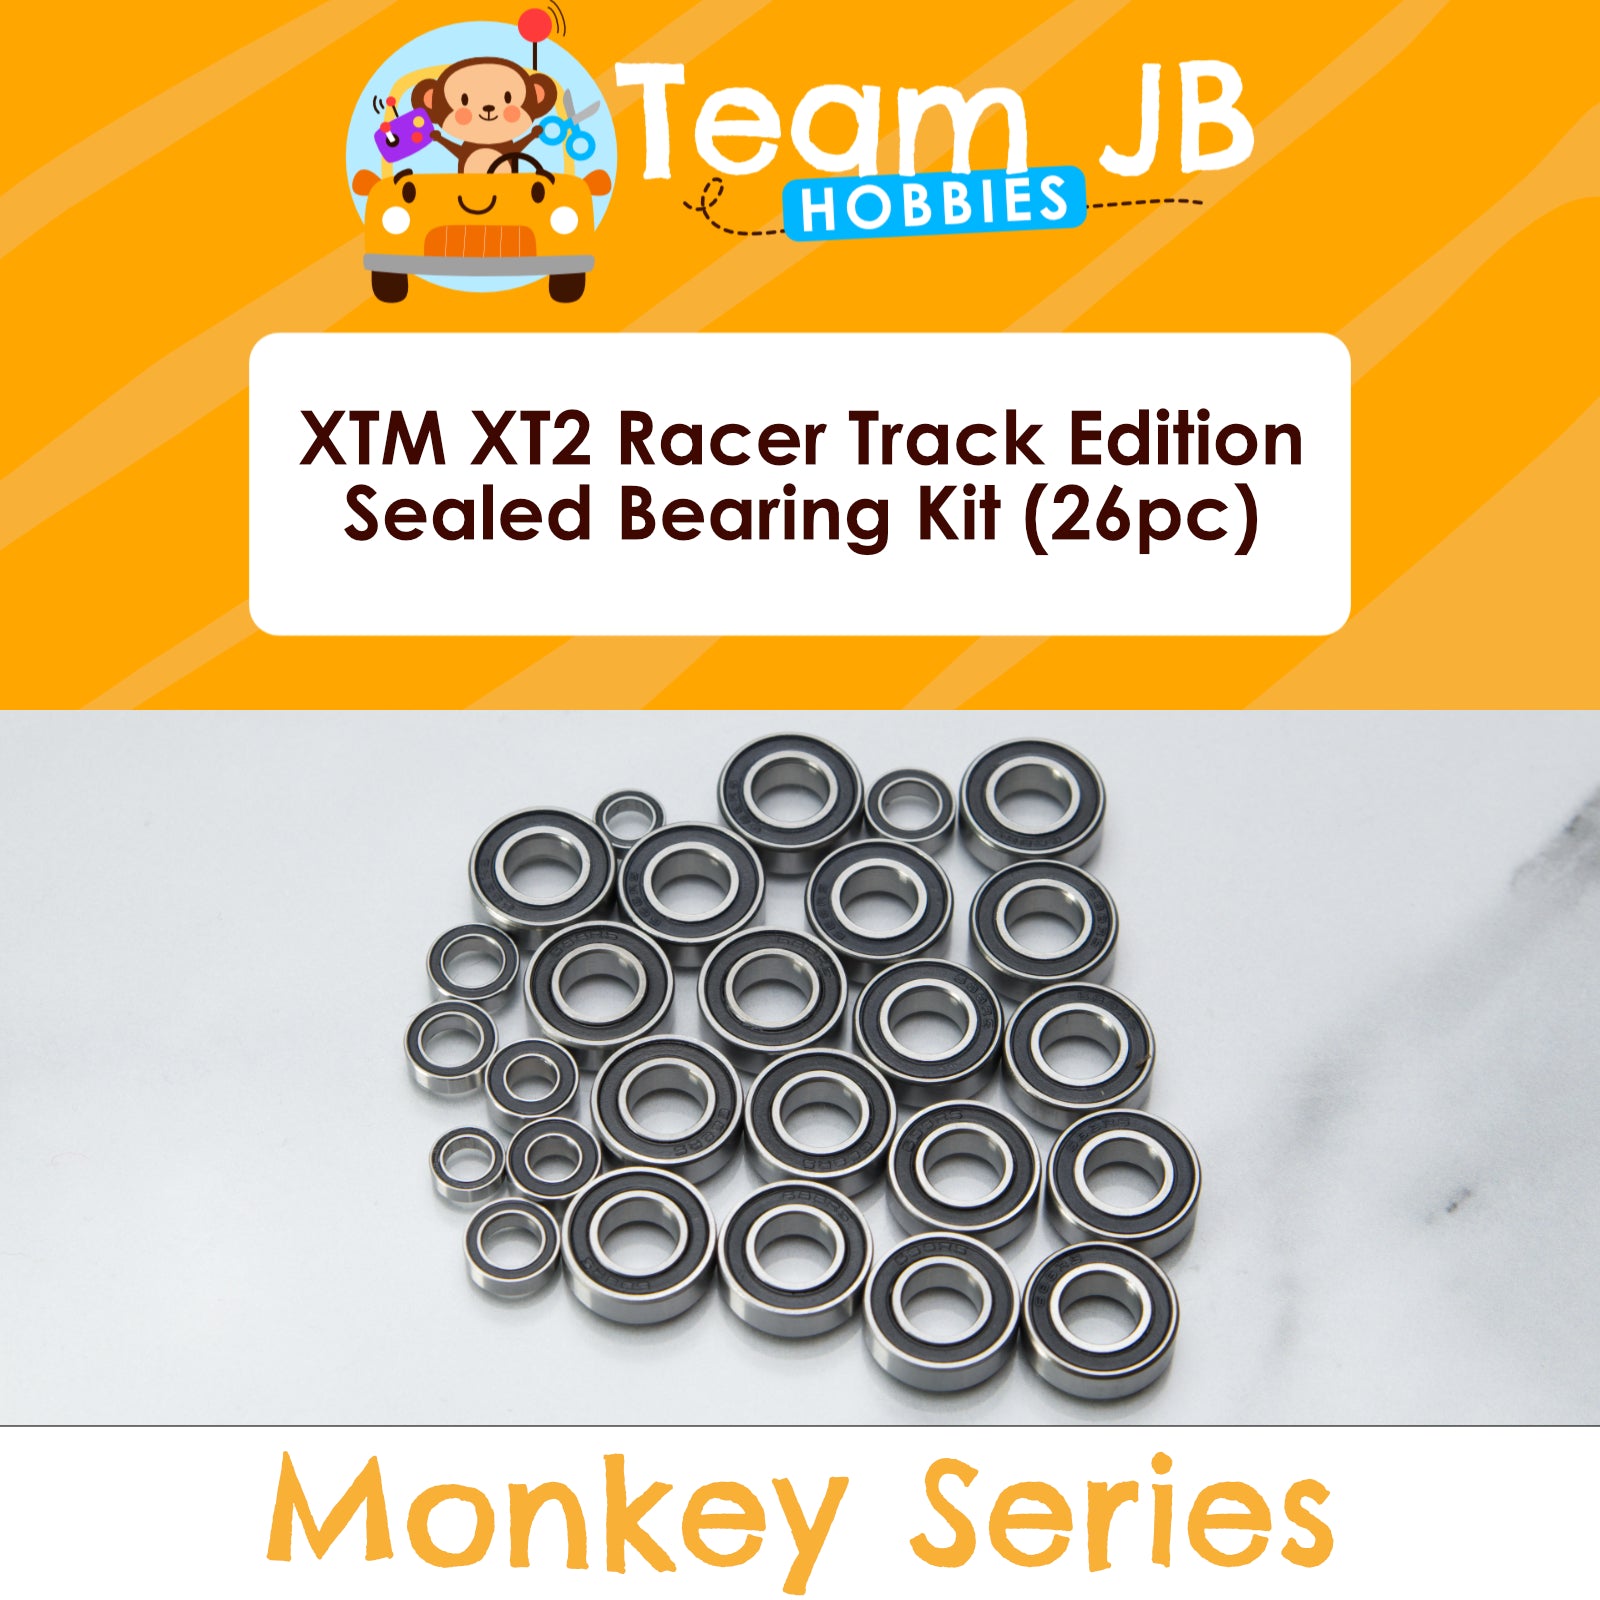 XTM XT2 Racer Track Edition - Sealed Bearing Kit